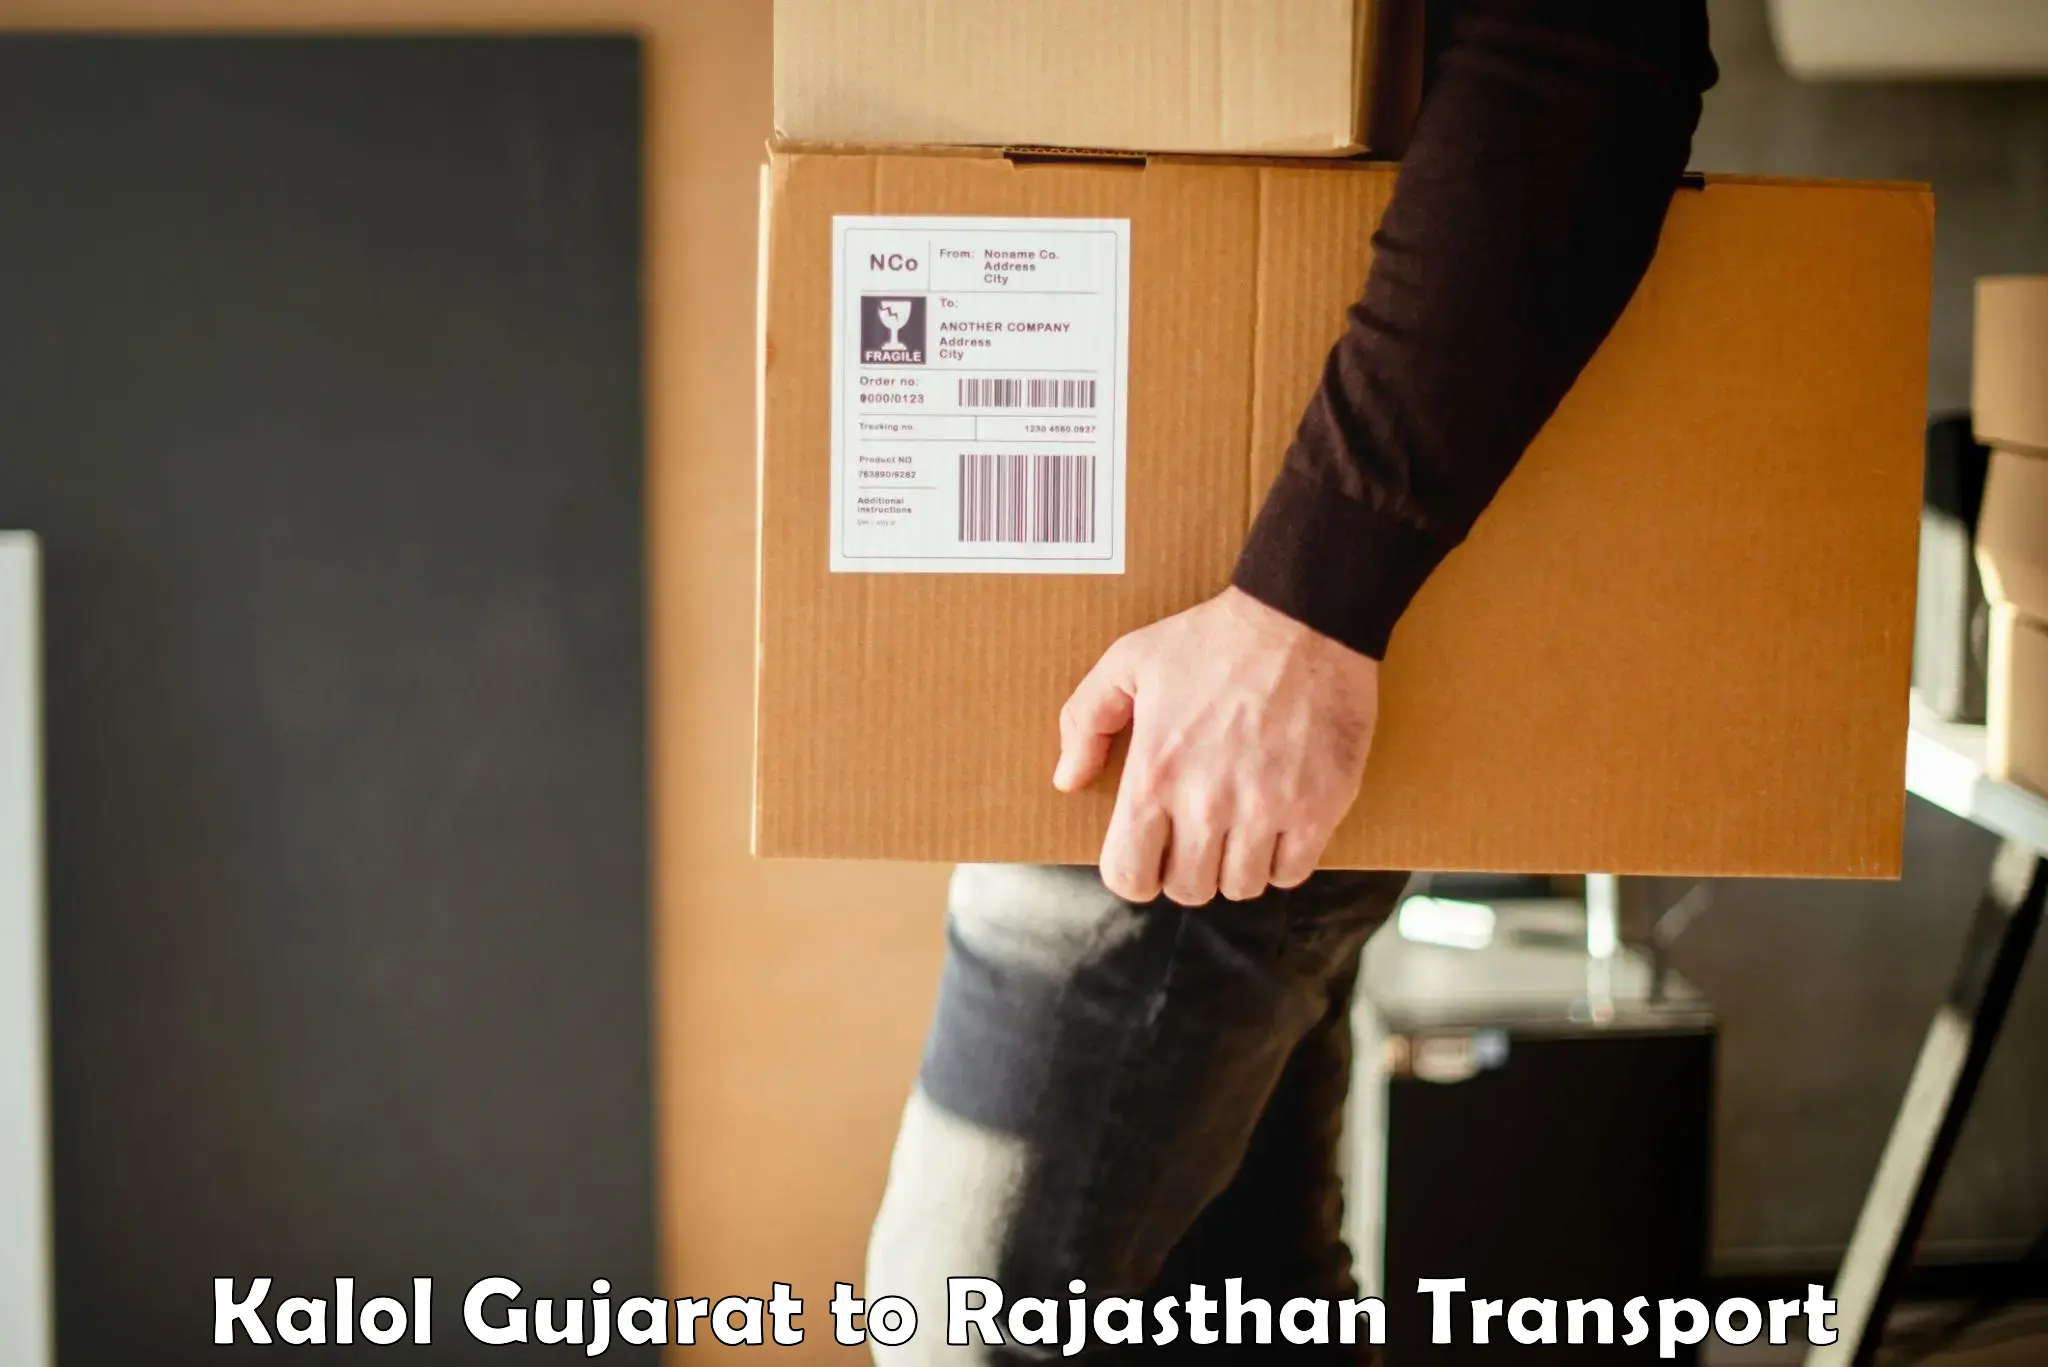 Truck transport companies in India Kalol Gujarat to Laxmangarh